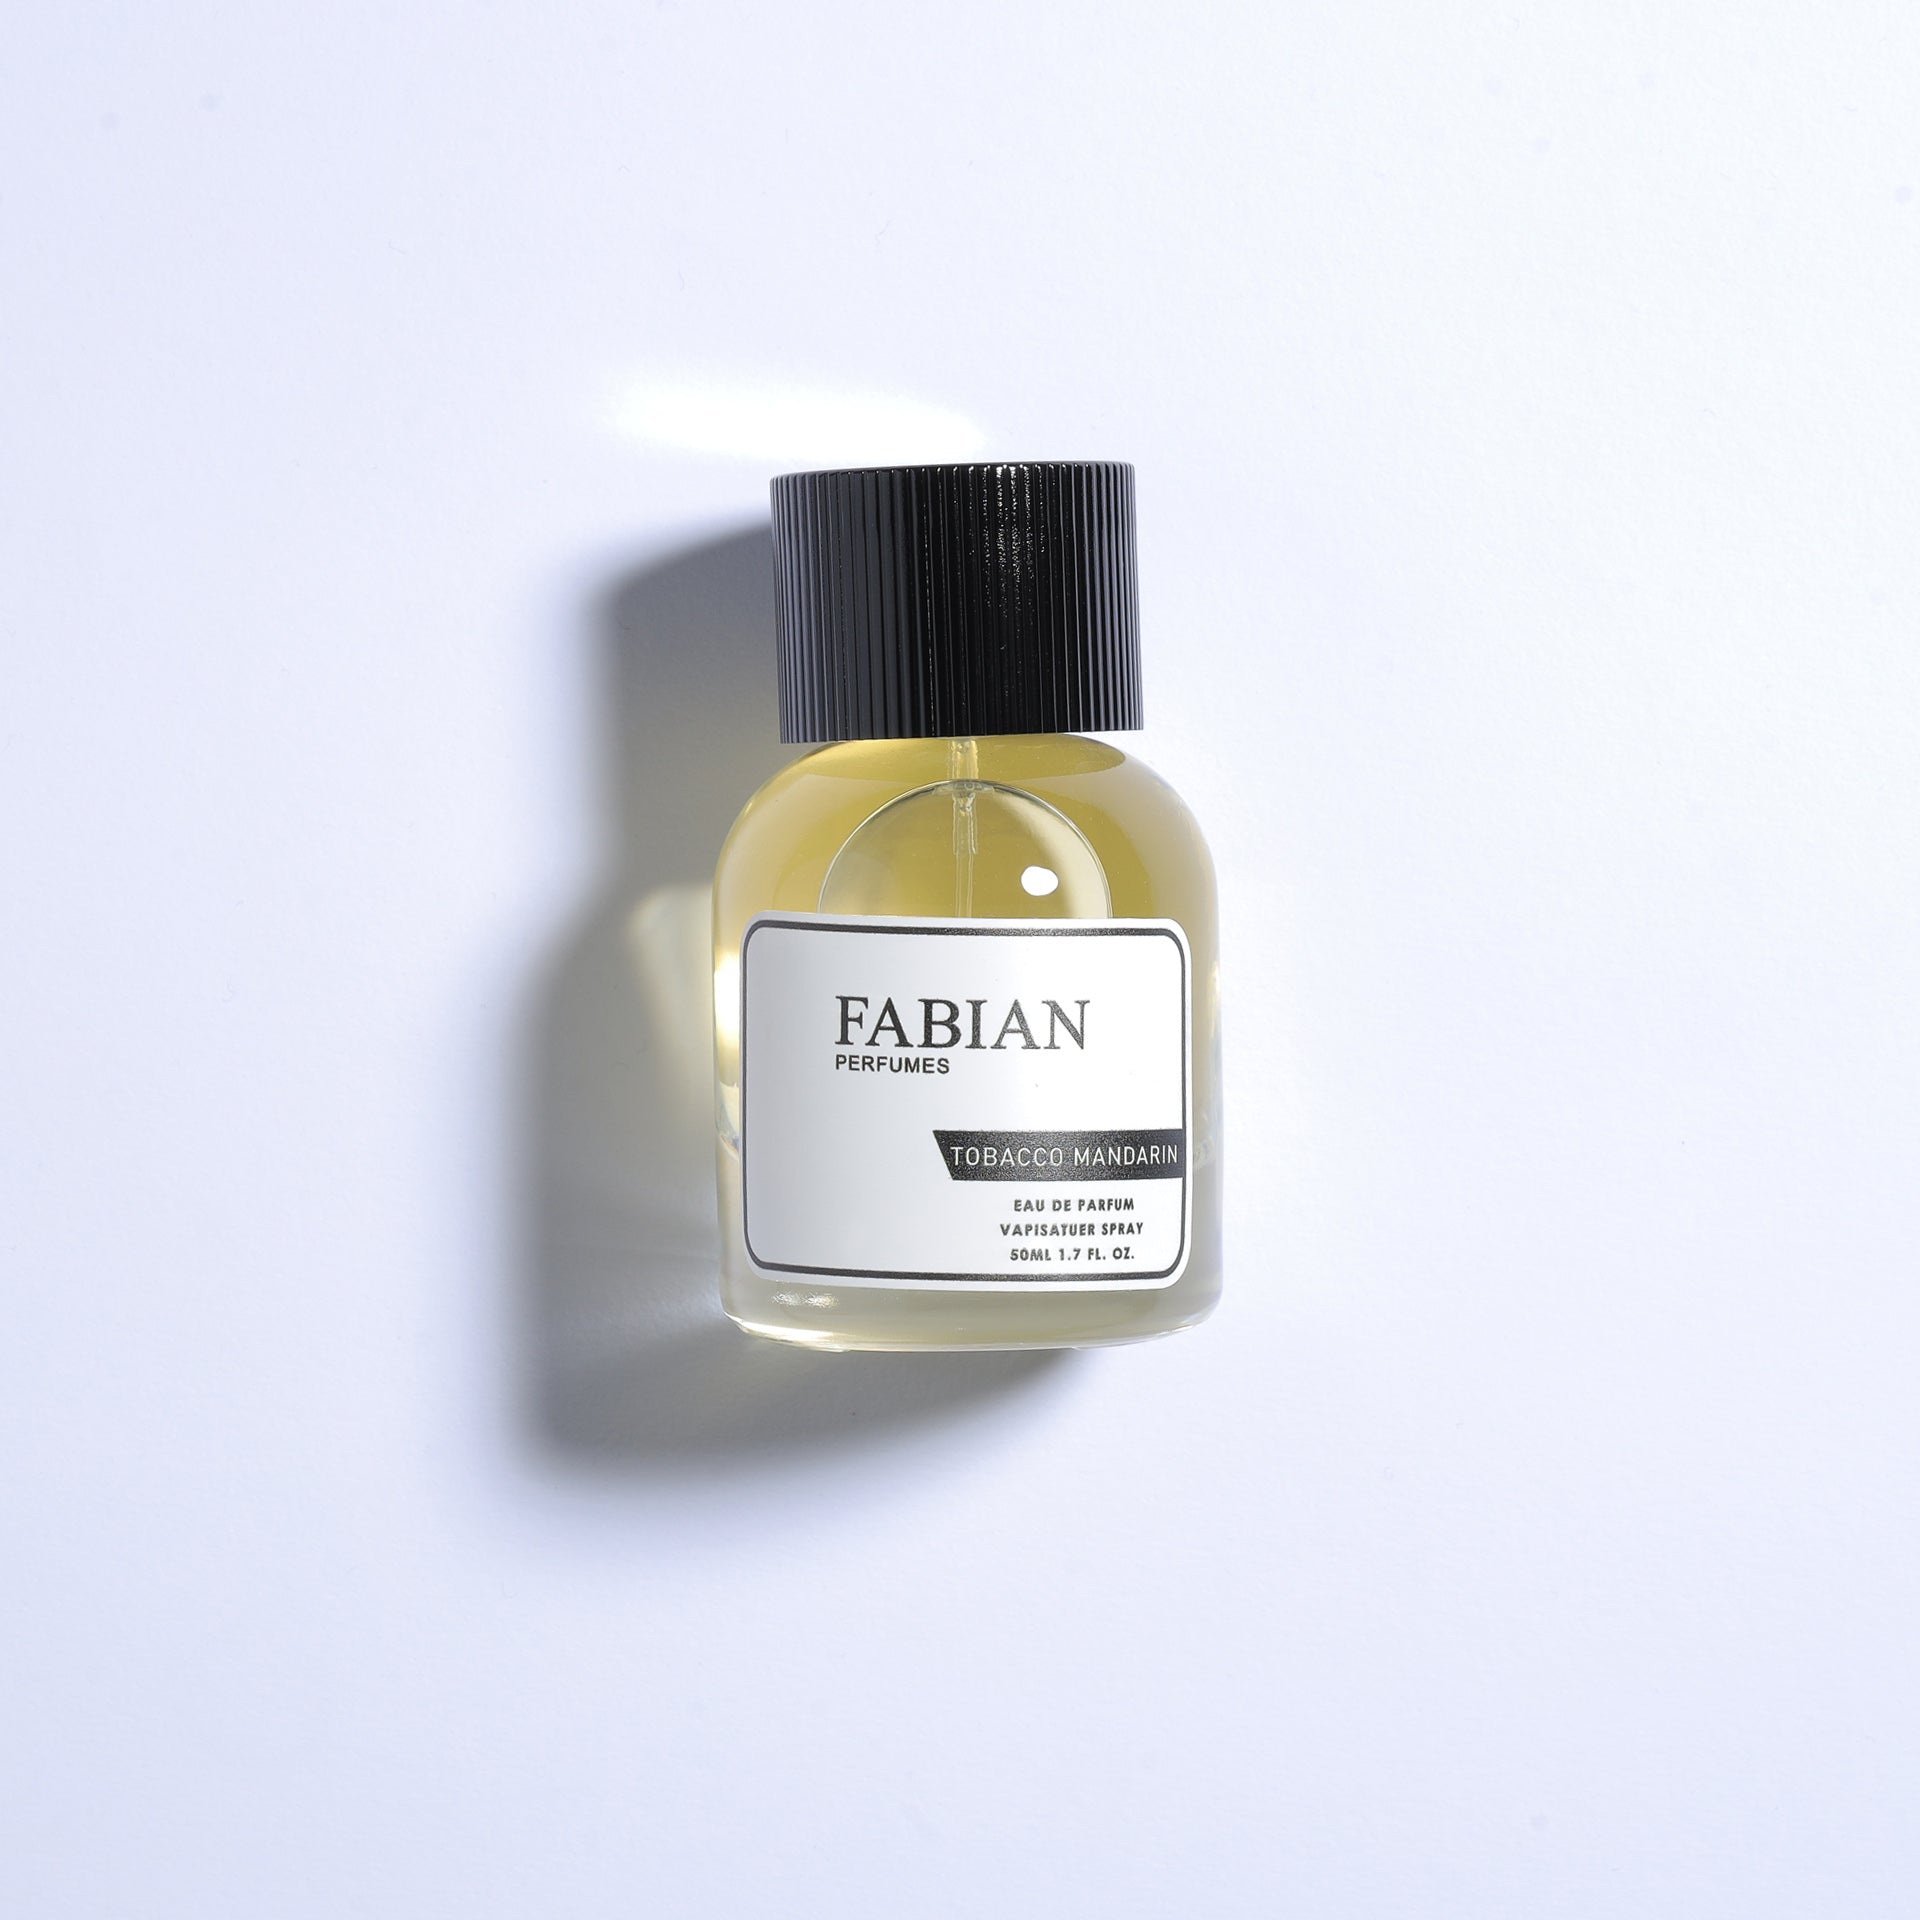 TOBACCO MANDARIN PERFUME 50 ML BY FABIAN PERFUME